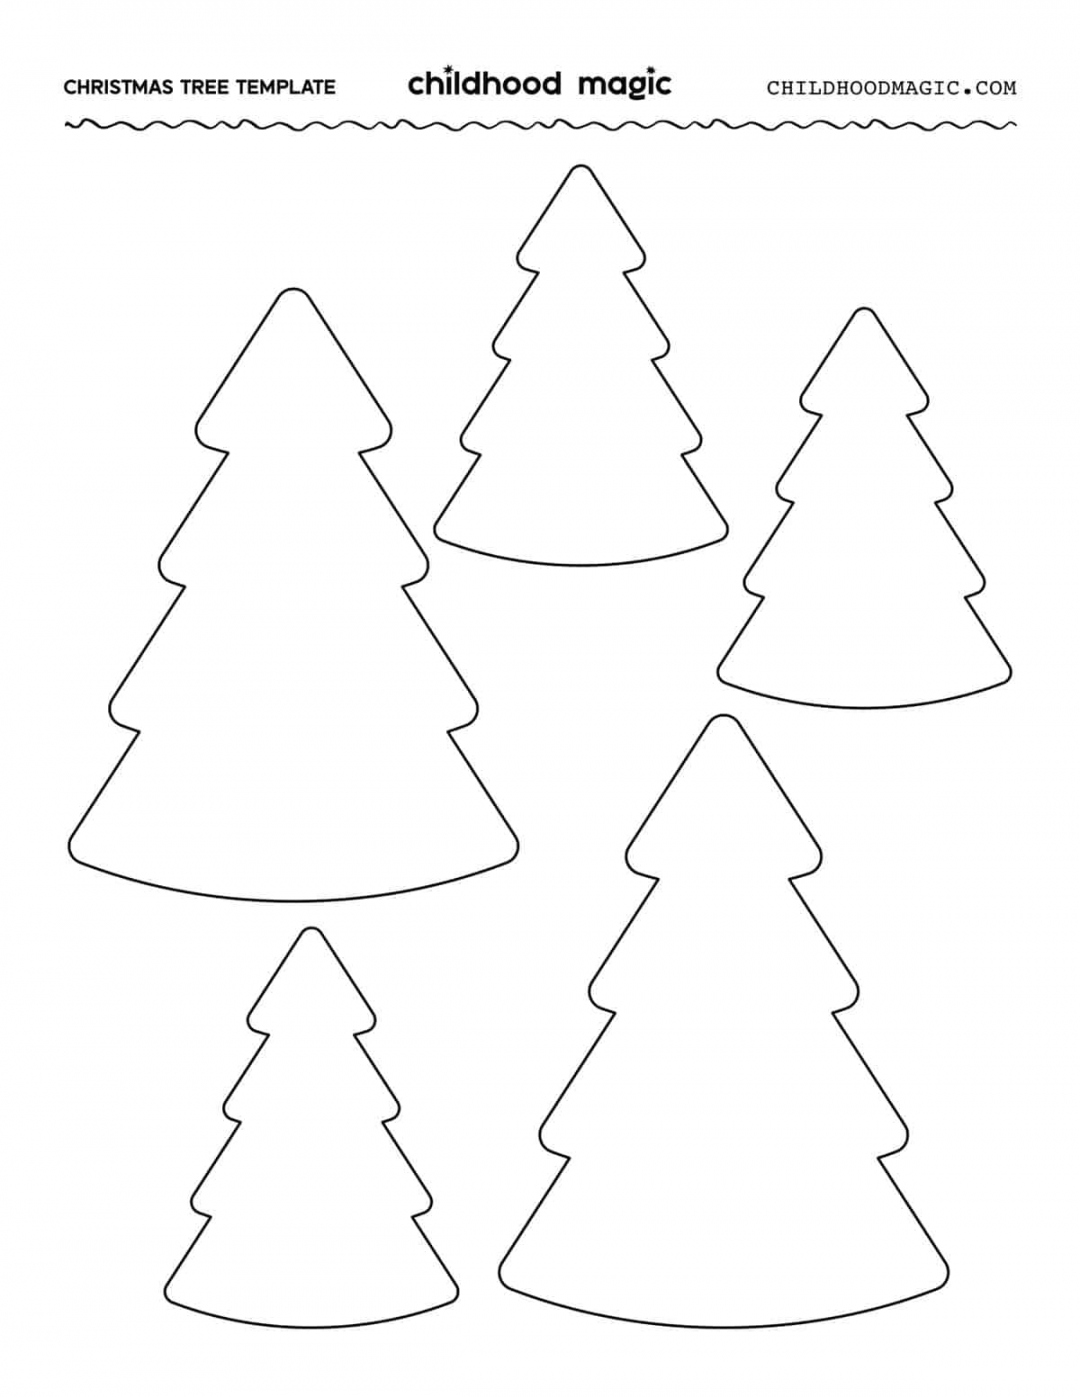 Christmas Tree Template - Free Printables - Childhood Magic - FREE Printables - Full Page Printable Christmas Tree Template